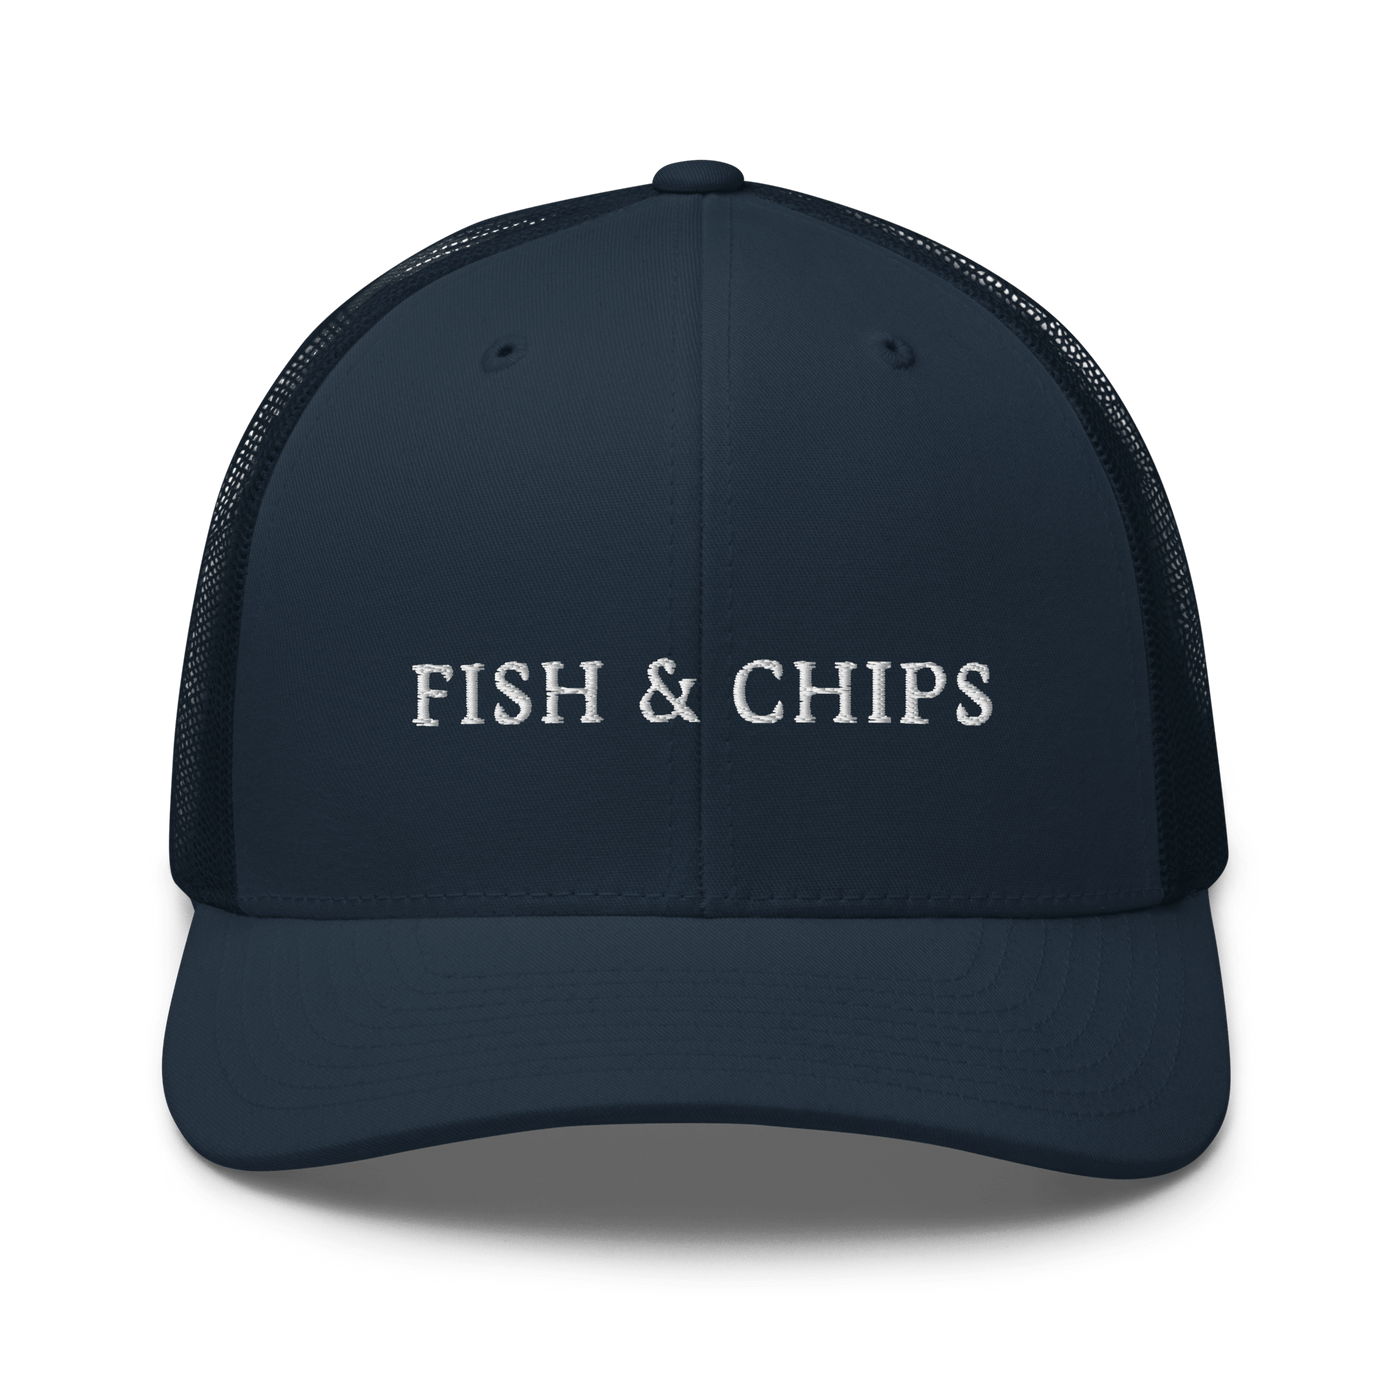 Fish & Chips Trucker Cap - Navy - - Just Another Cap Store